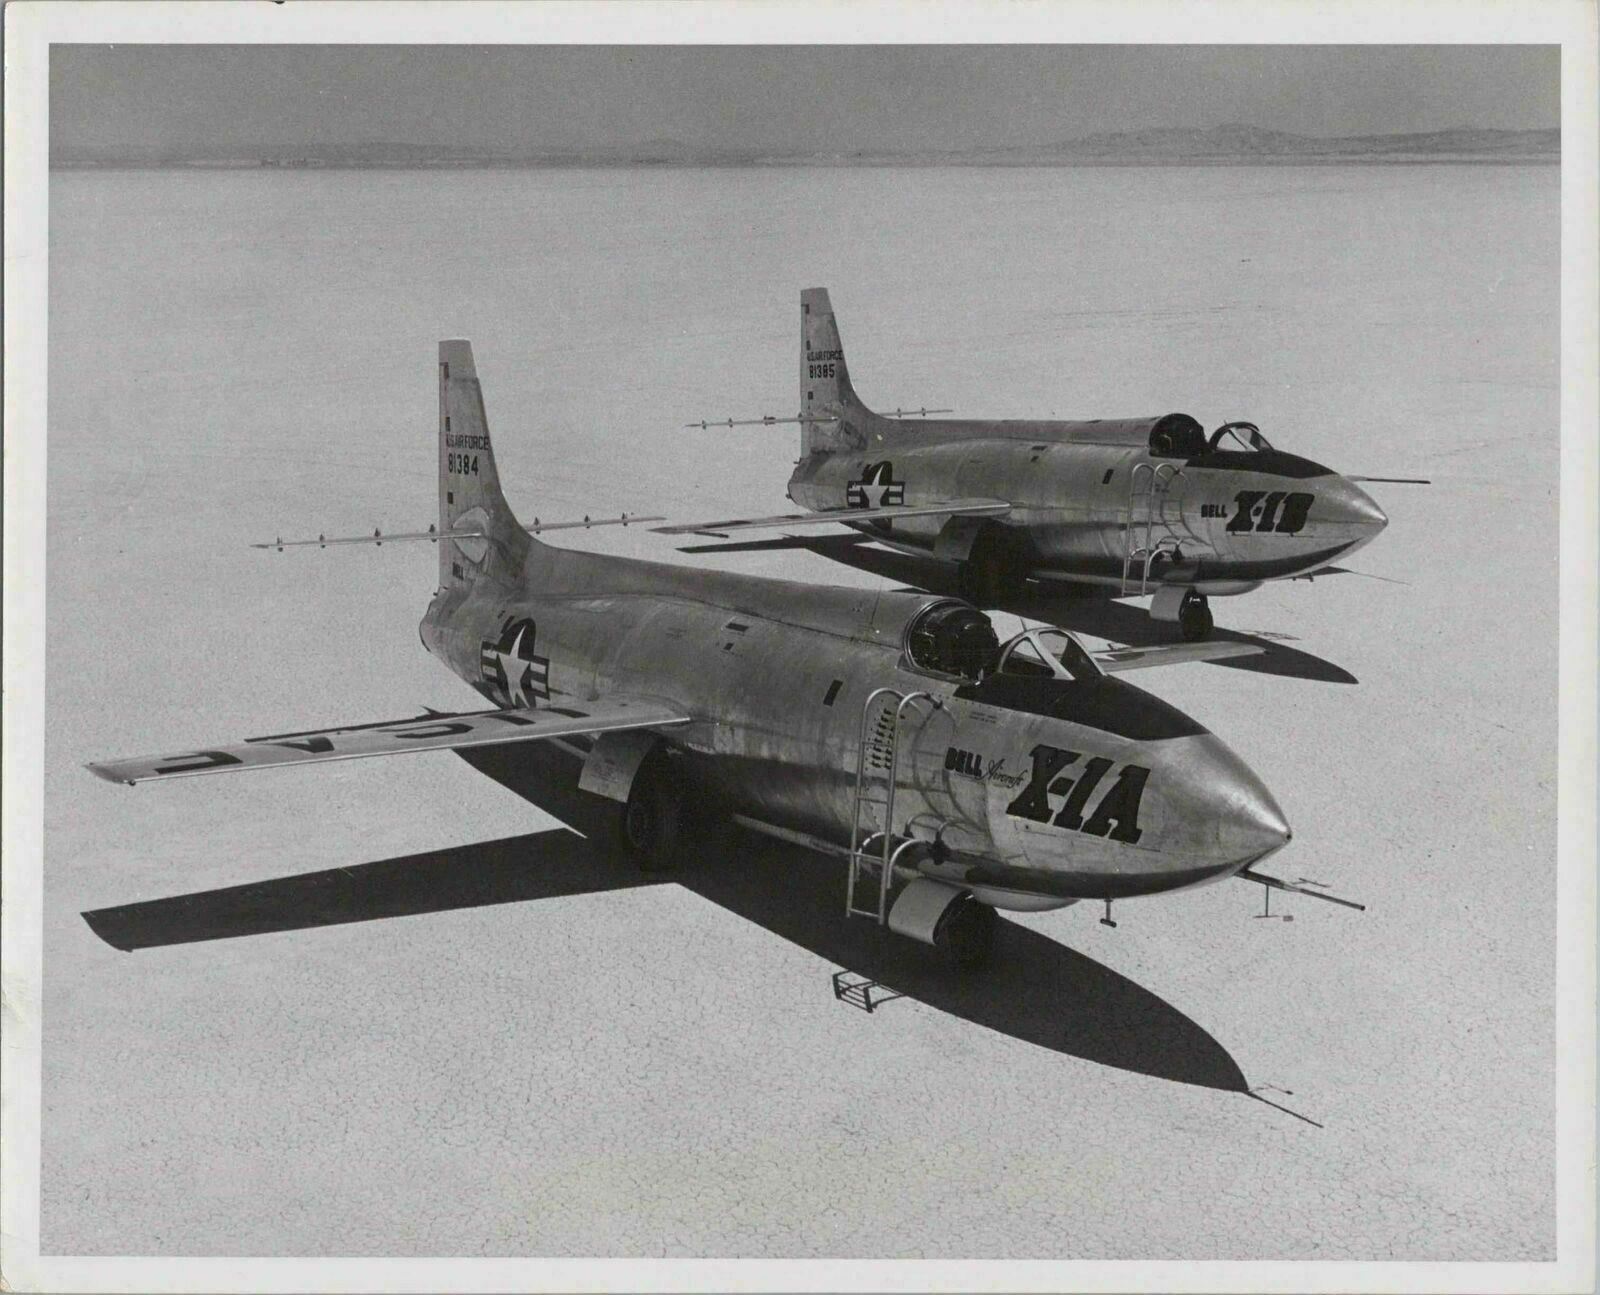 BELL X-1A & X-1B ROCKET AIRCRAFT LARGE VINTAGE ORIGINAL MANUFACTURERS PHOTO